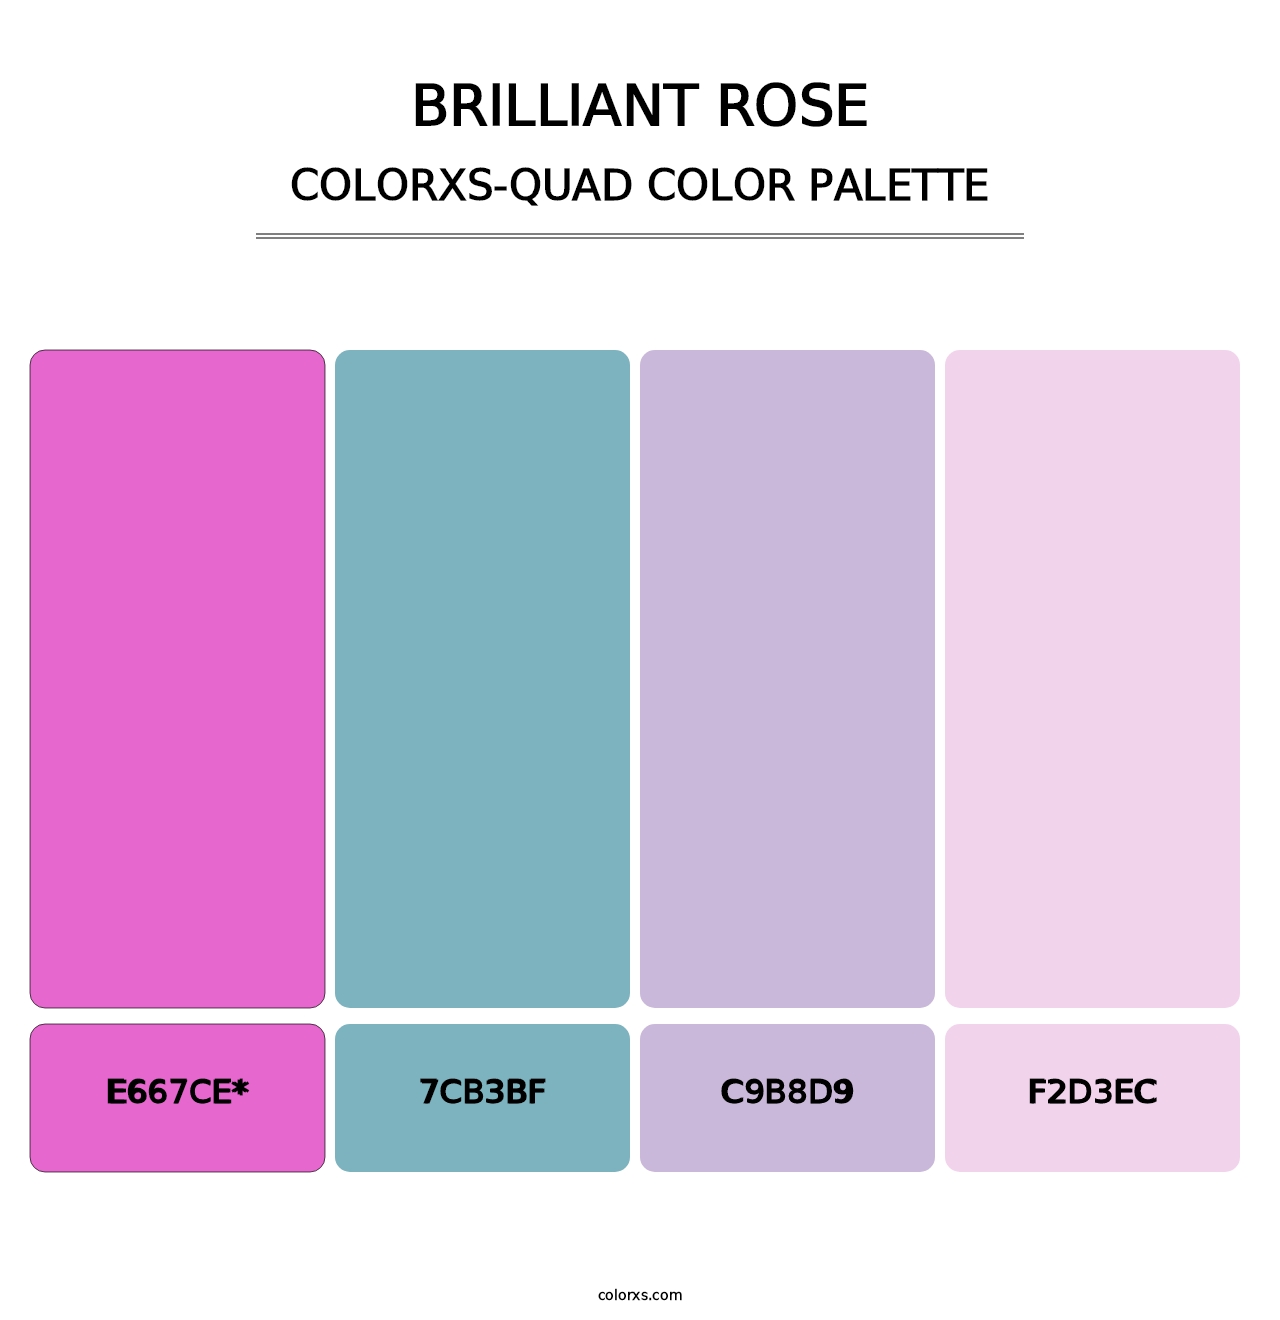 Brilliant Rose - Colorxs Quad Palette